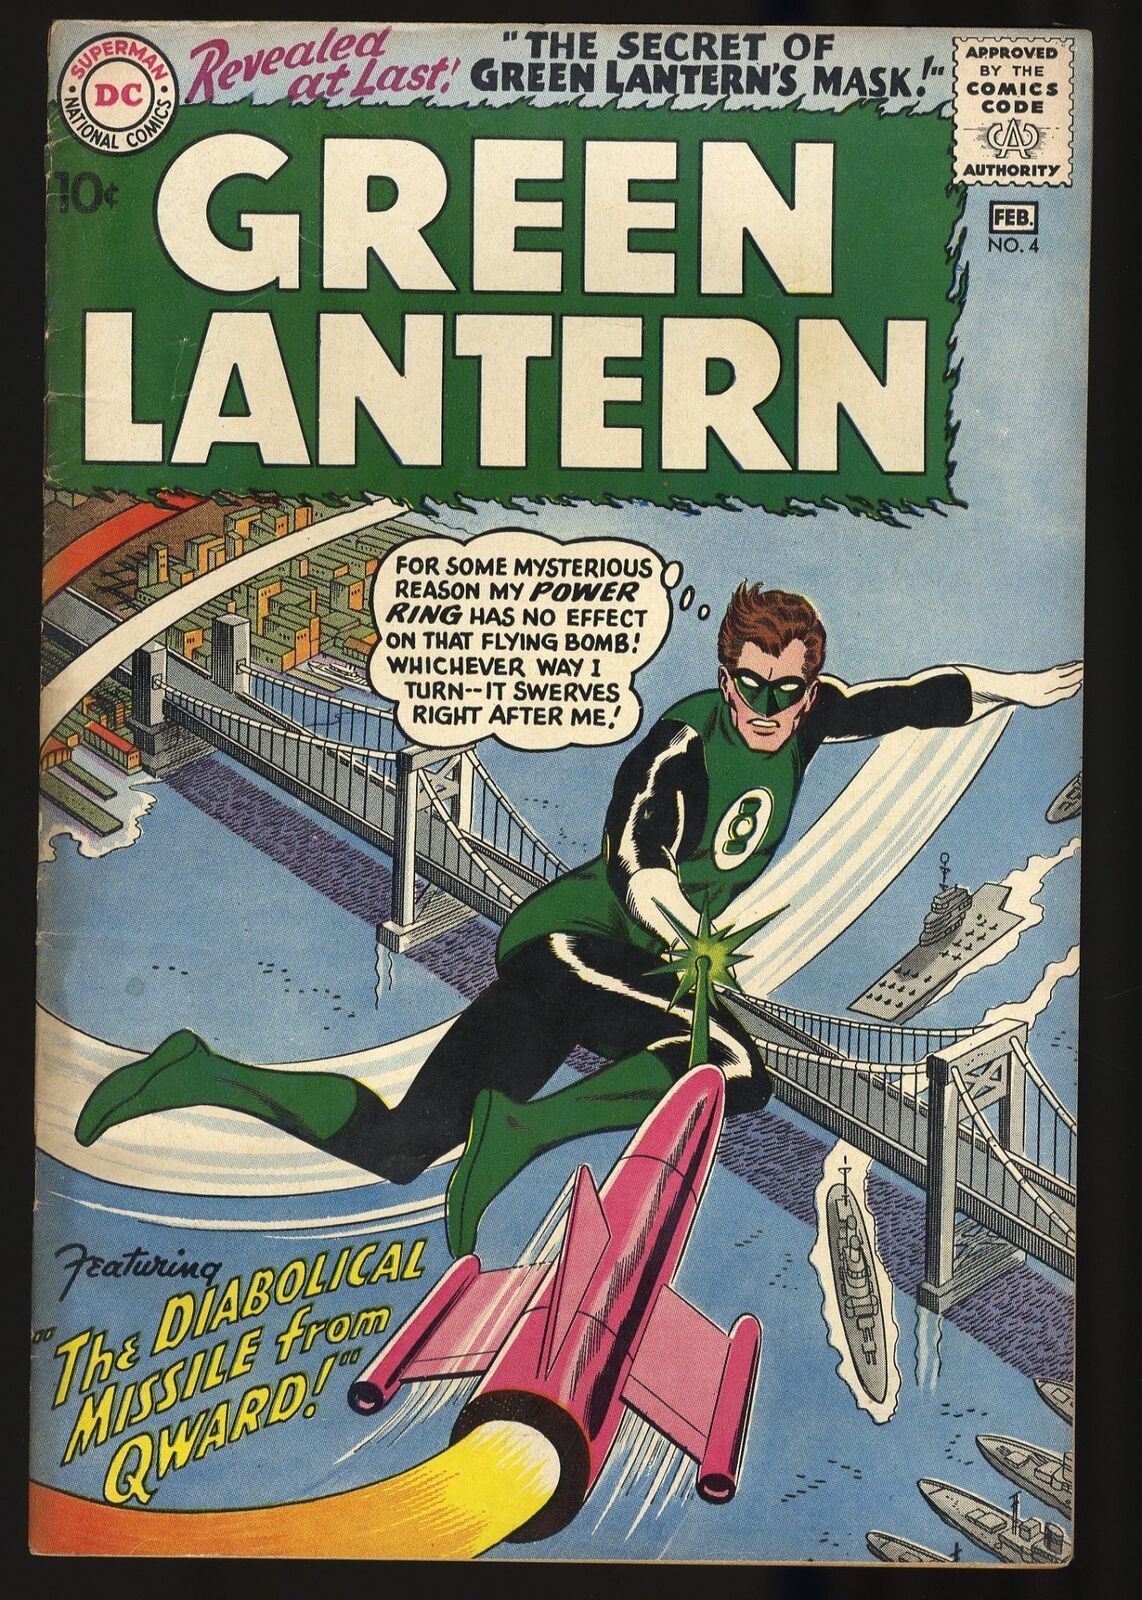 Green Lantern #4 VG 4.0 Secret Green Lantern's Mask Kane/Giella Cover